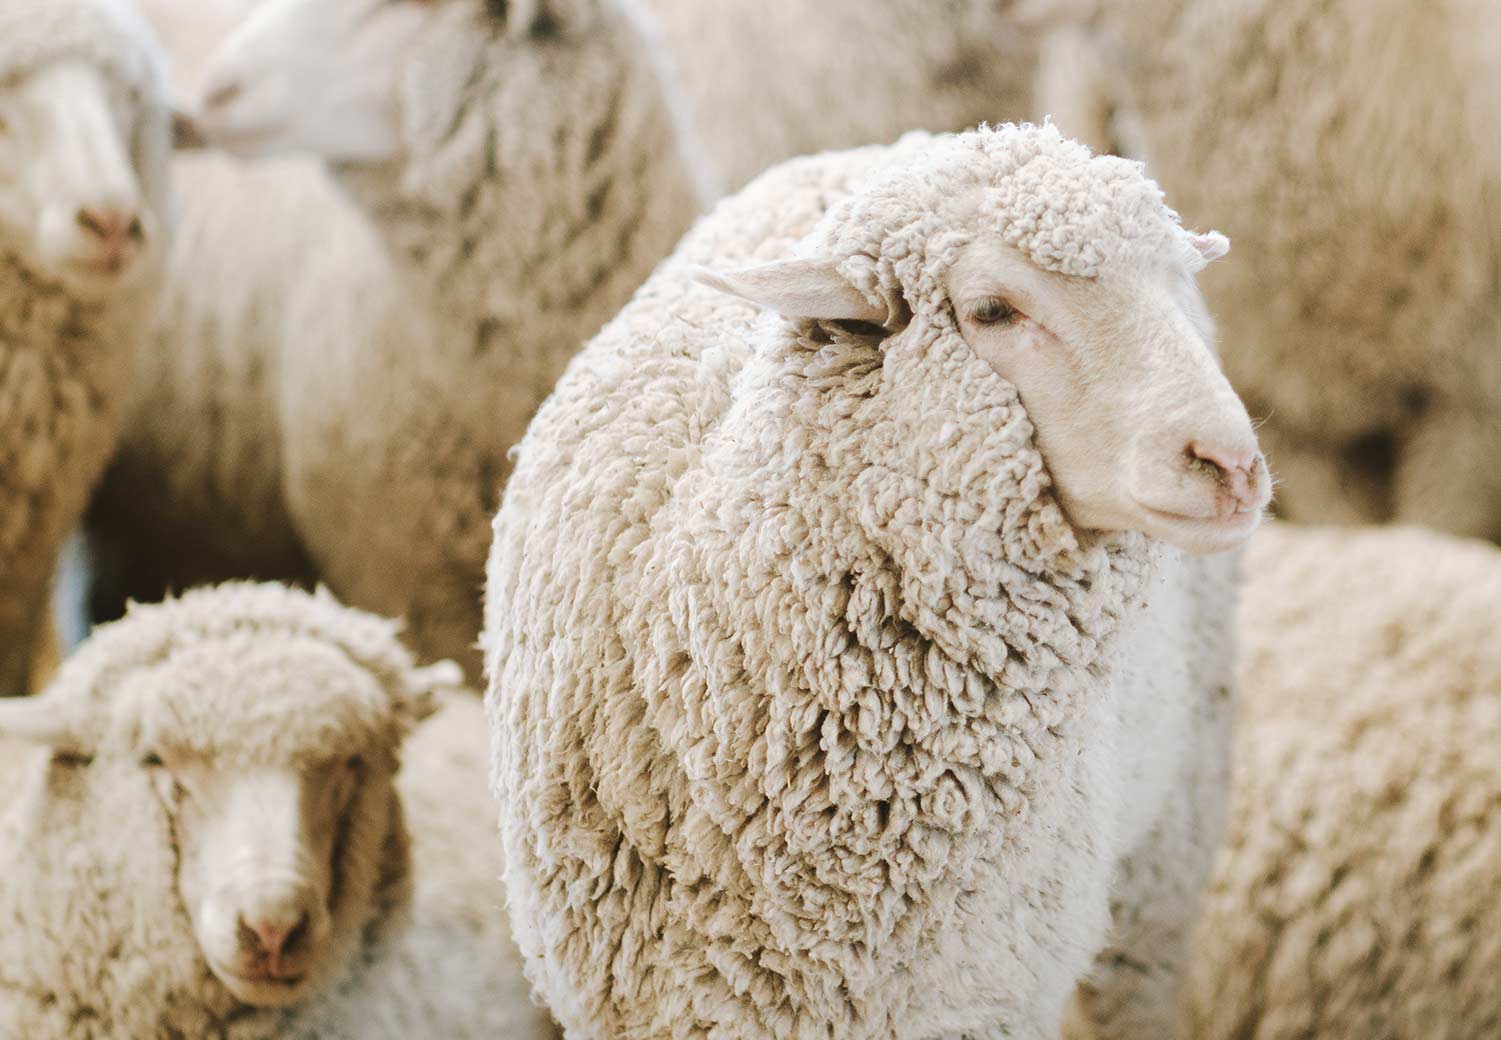 Duckworth-Wool-Clothing-Merino-Sheep